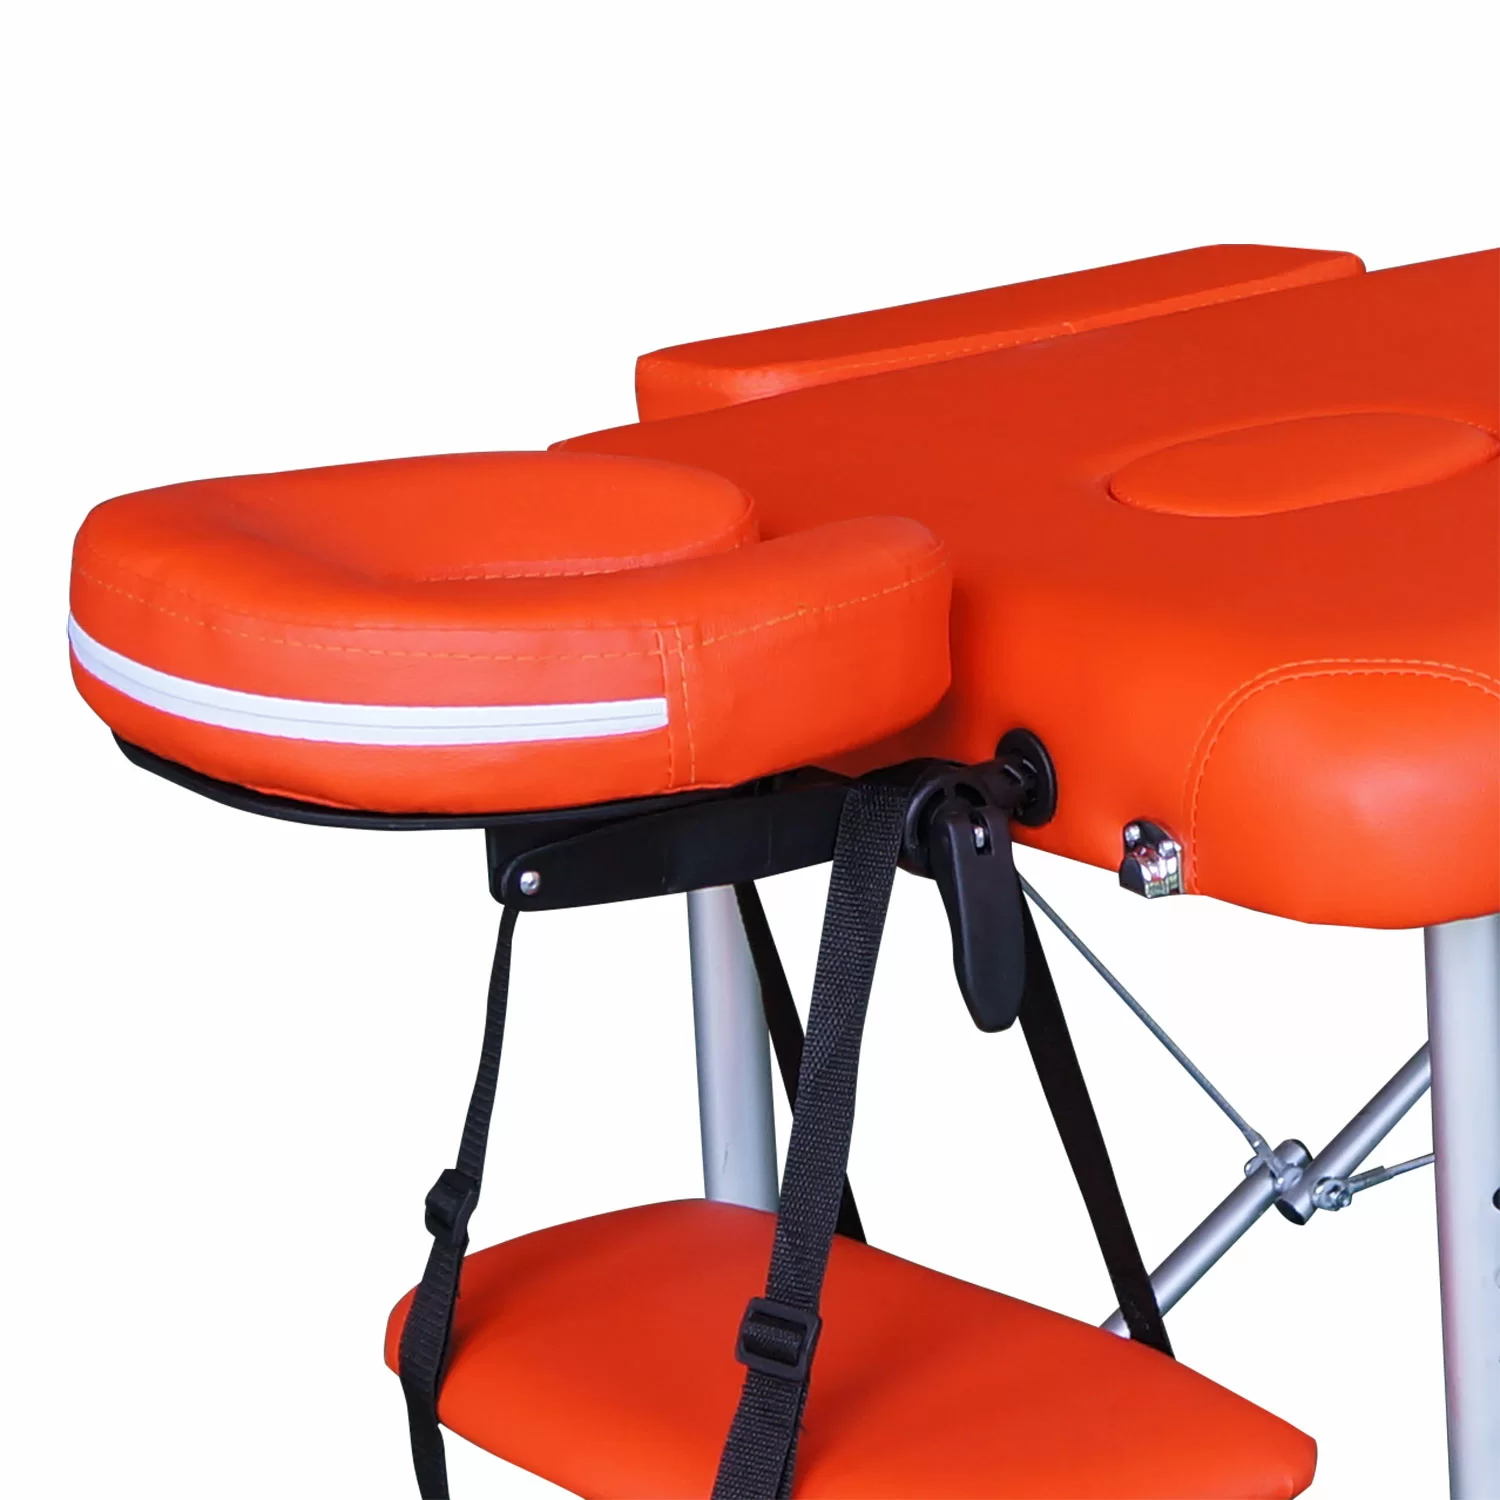 Фото Массажный стол DFC NIRVANA, Elegant, 186х60х4 см, алюм. ножки, цвет оранжевый (Orange) TS2010_Or со склада магазина СпортЕВ